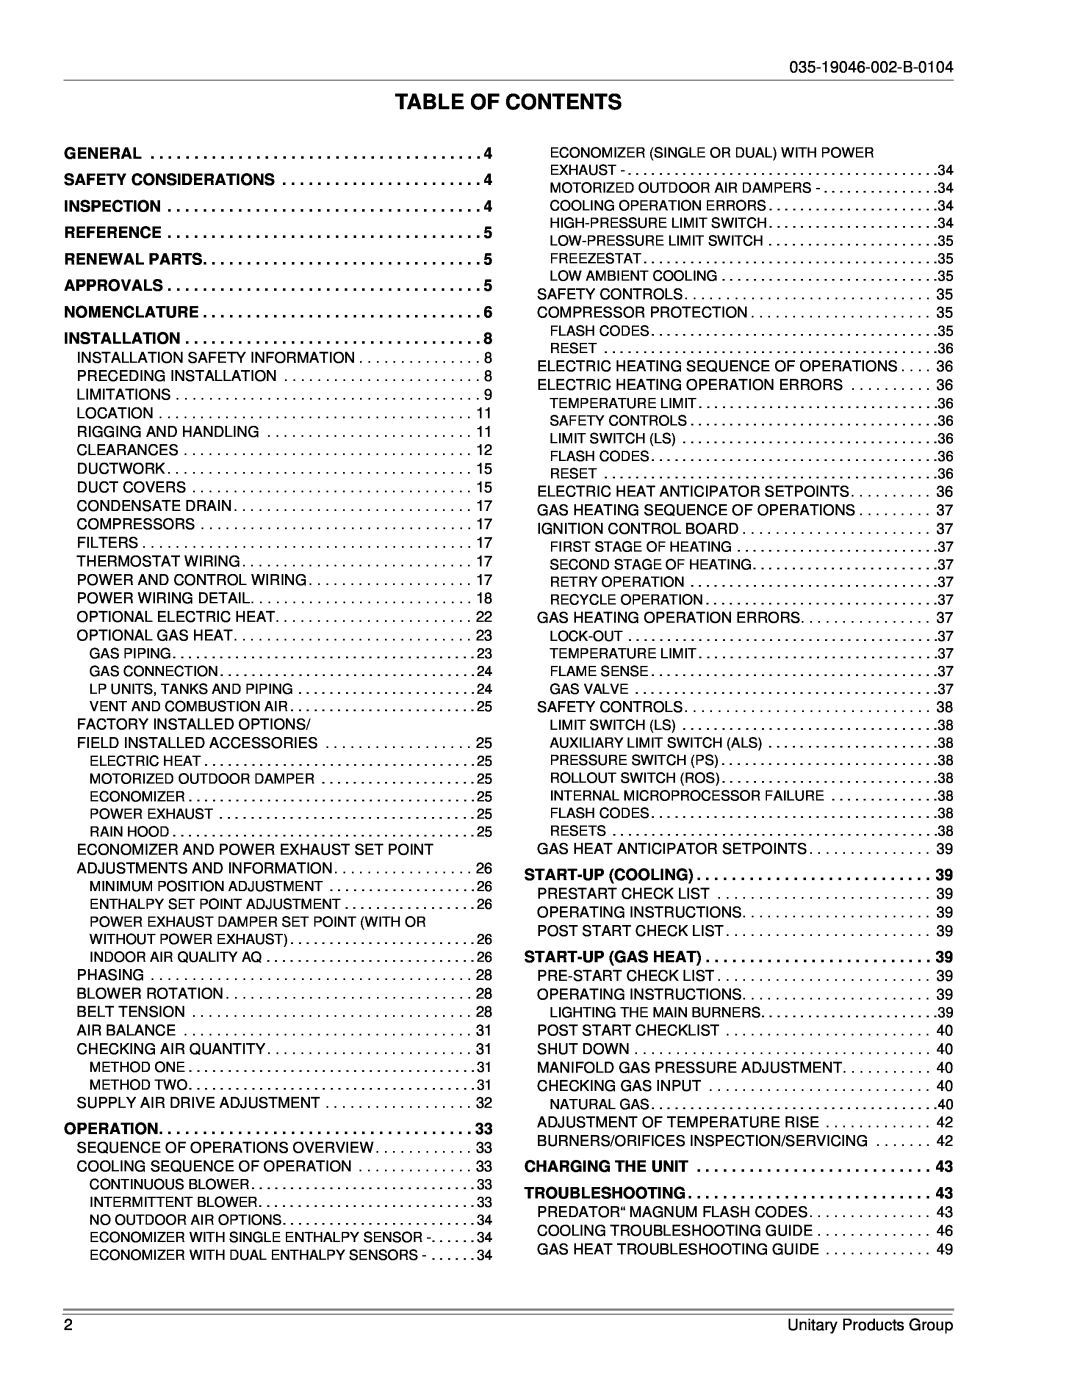 York DJ150 installation manual Table Of Contents, 035-19046-002-B-0104 